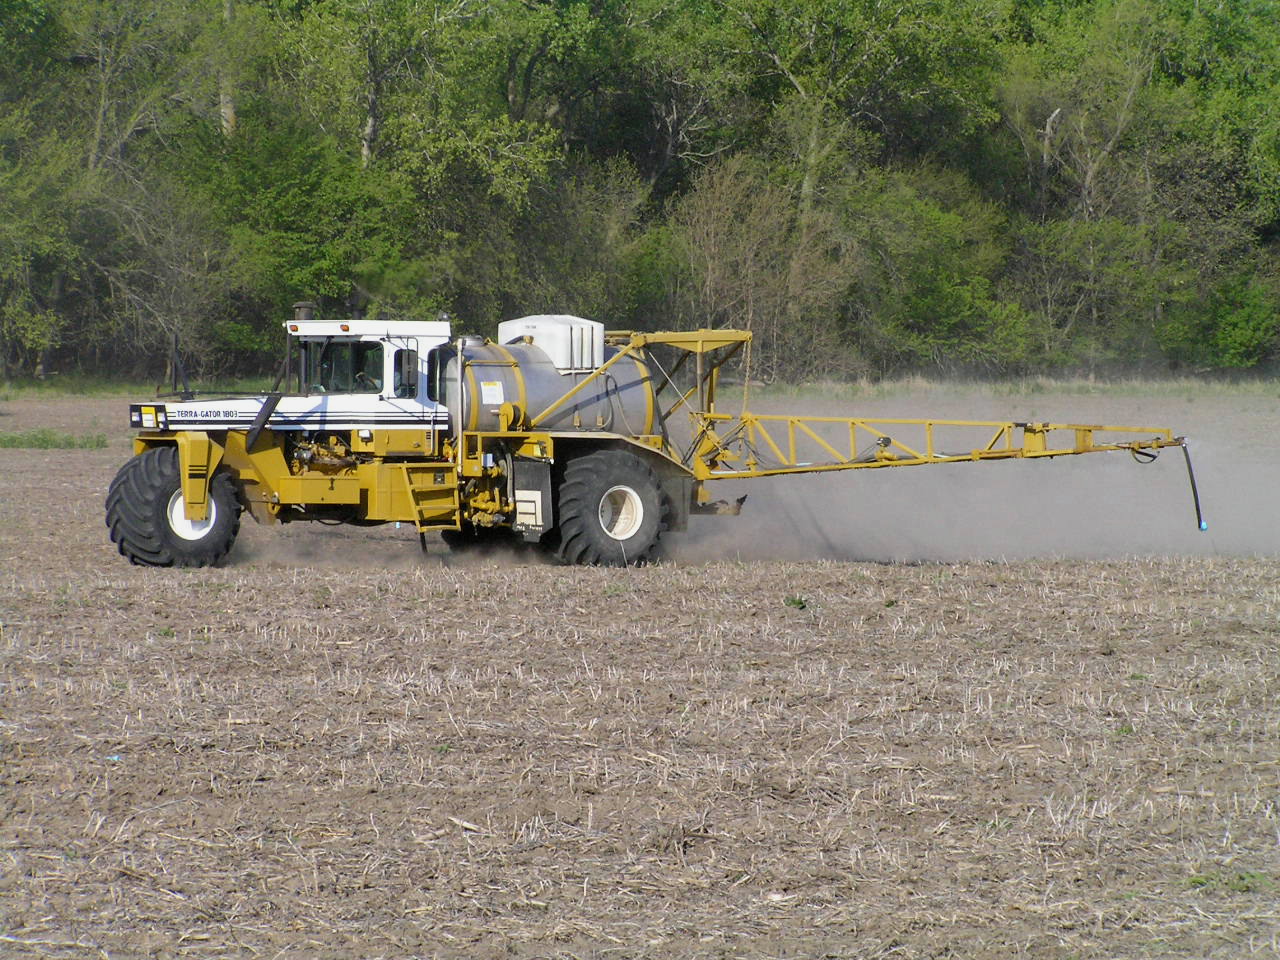 Ag machine sprays in field